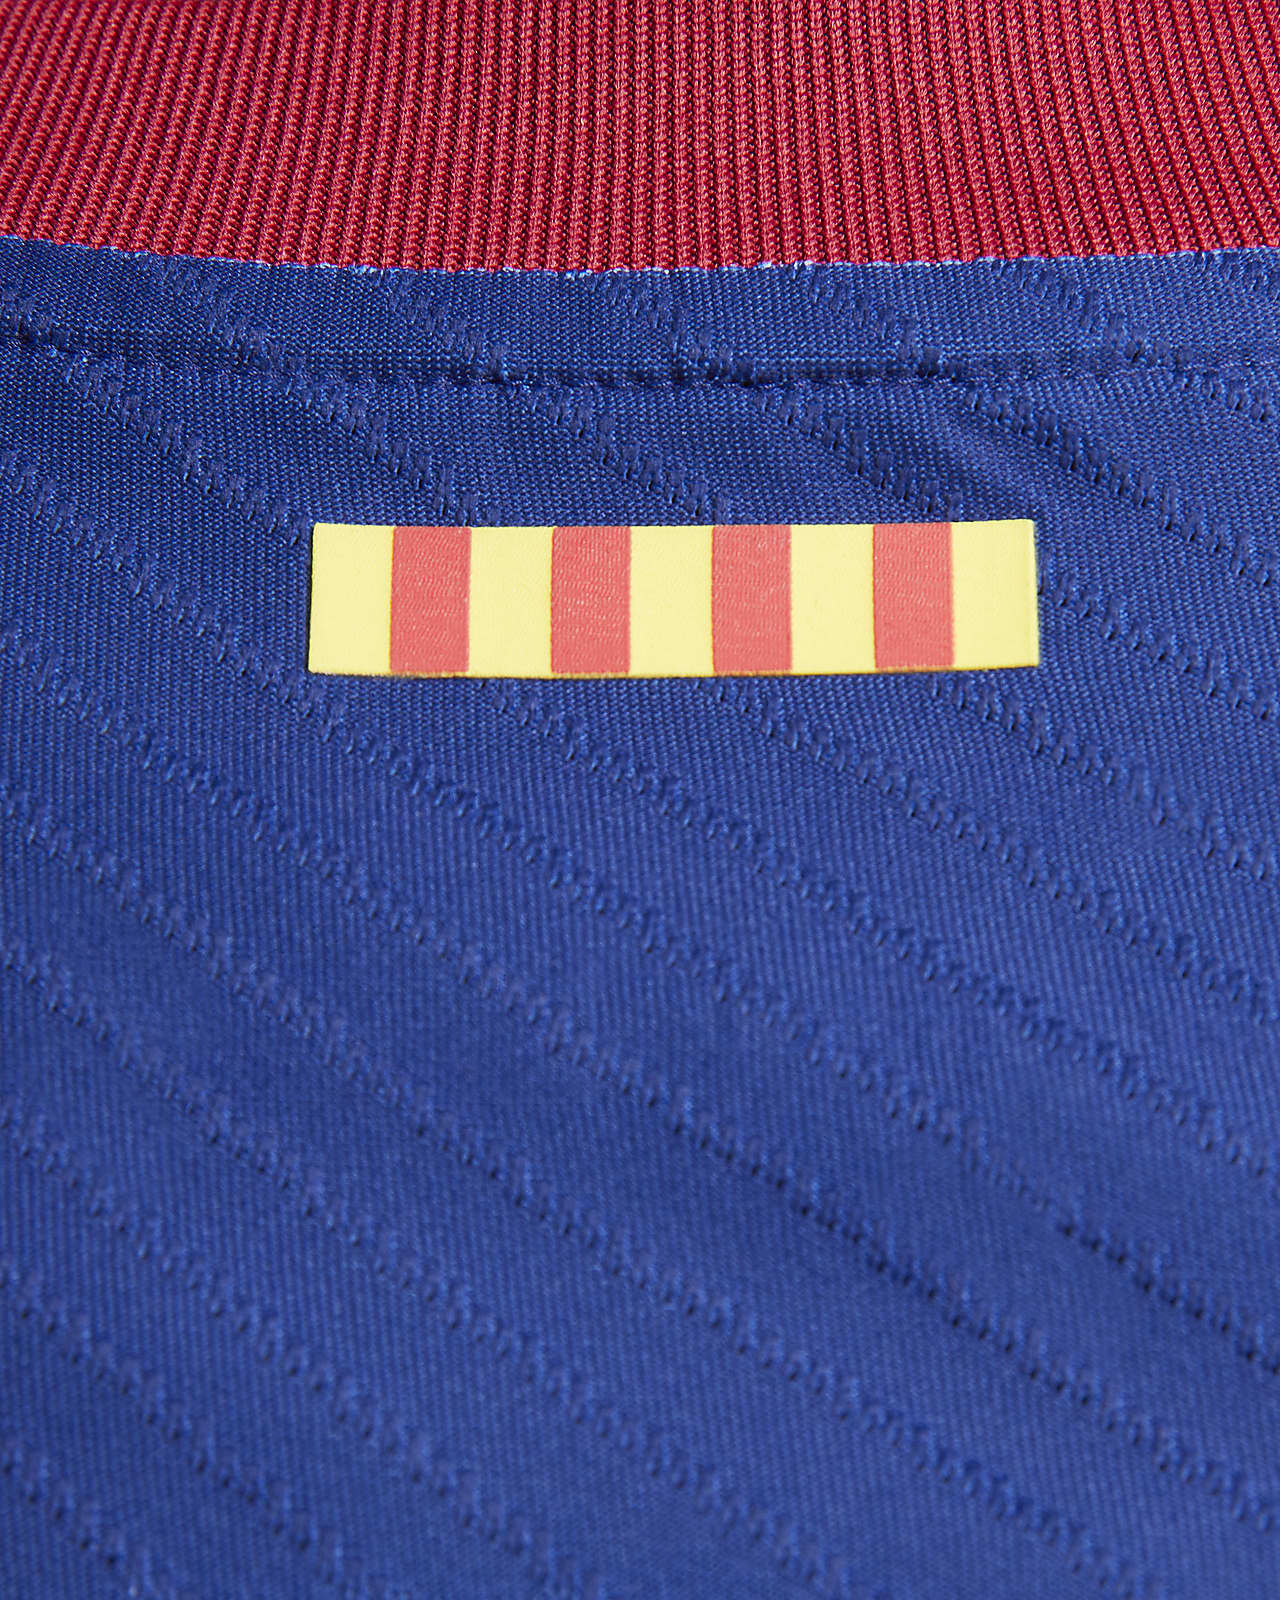 FC Barcelona 2023/24 Match Home Men's Nike Dri-FIT ADV Soccer Shorts